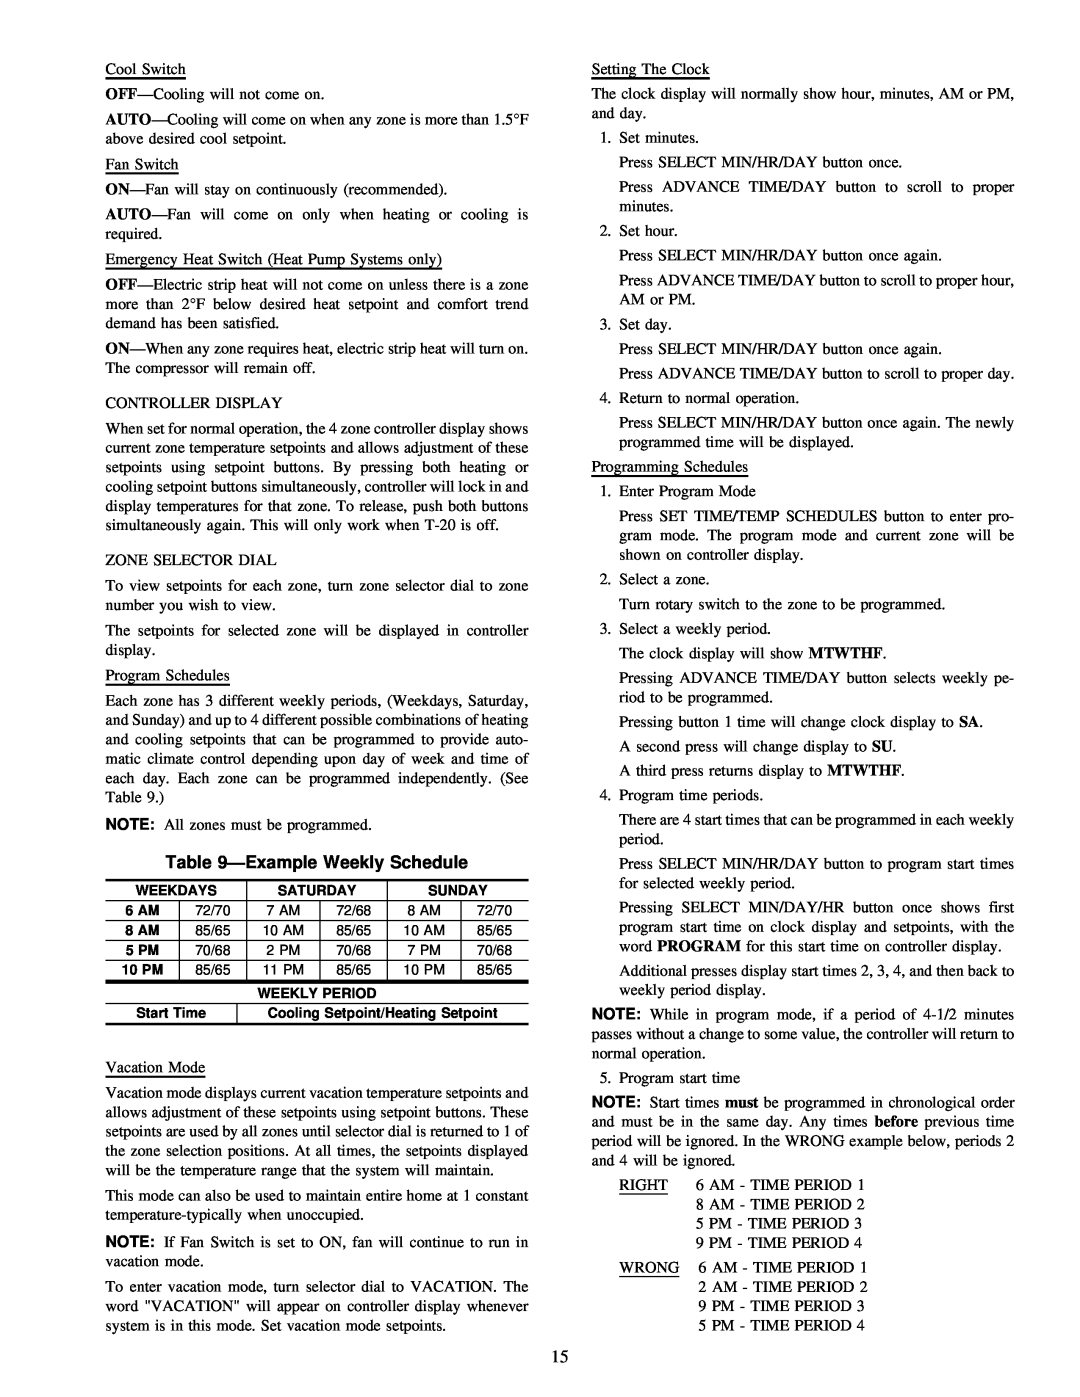 Carrier ZONEKIT4ZCAR instruction manual ÐExample Weekly Schedule 